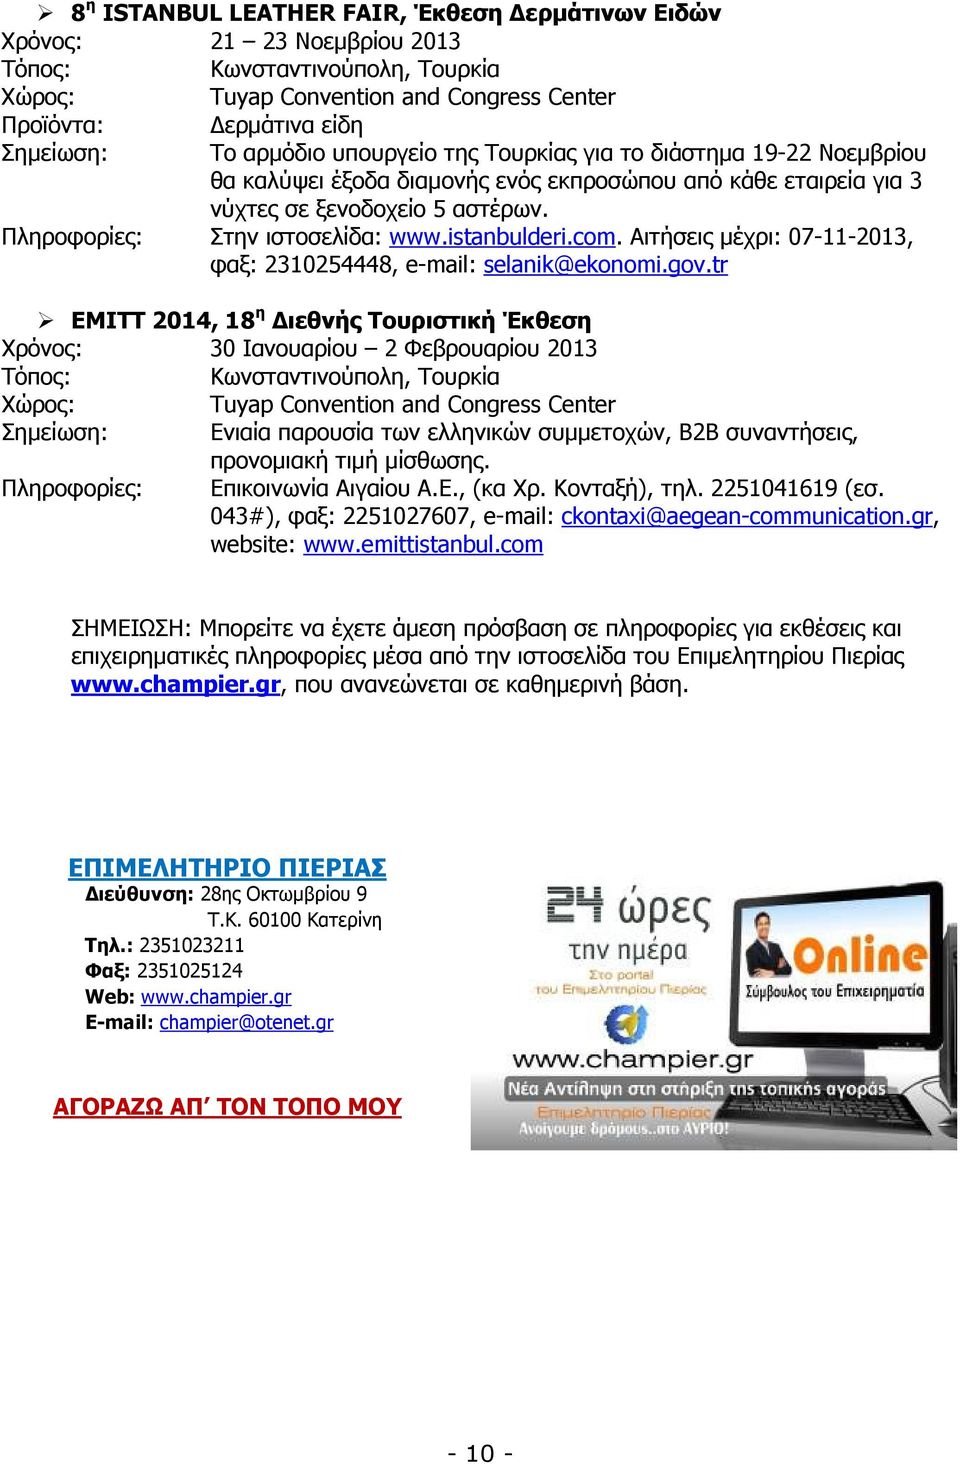 istanbulderi.com. Αιτήσεις µέχρι: 07-11-2013, φαξ: 2310254448, e-mail: selanik@ekonomi.gov.